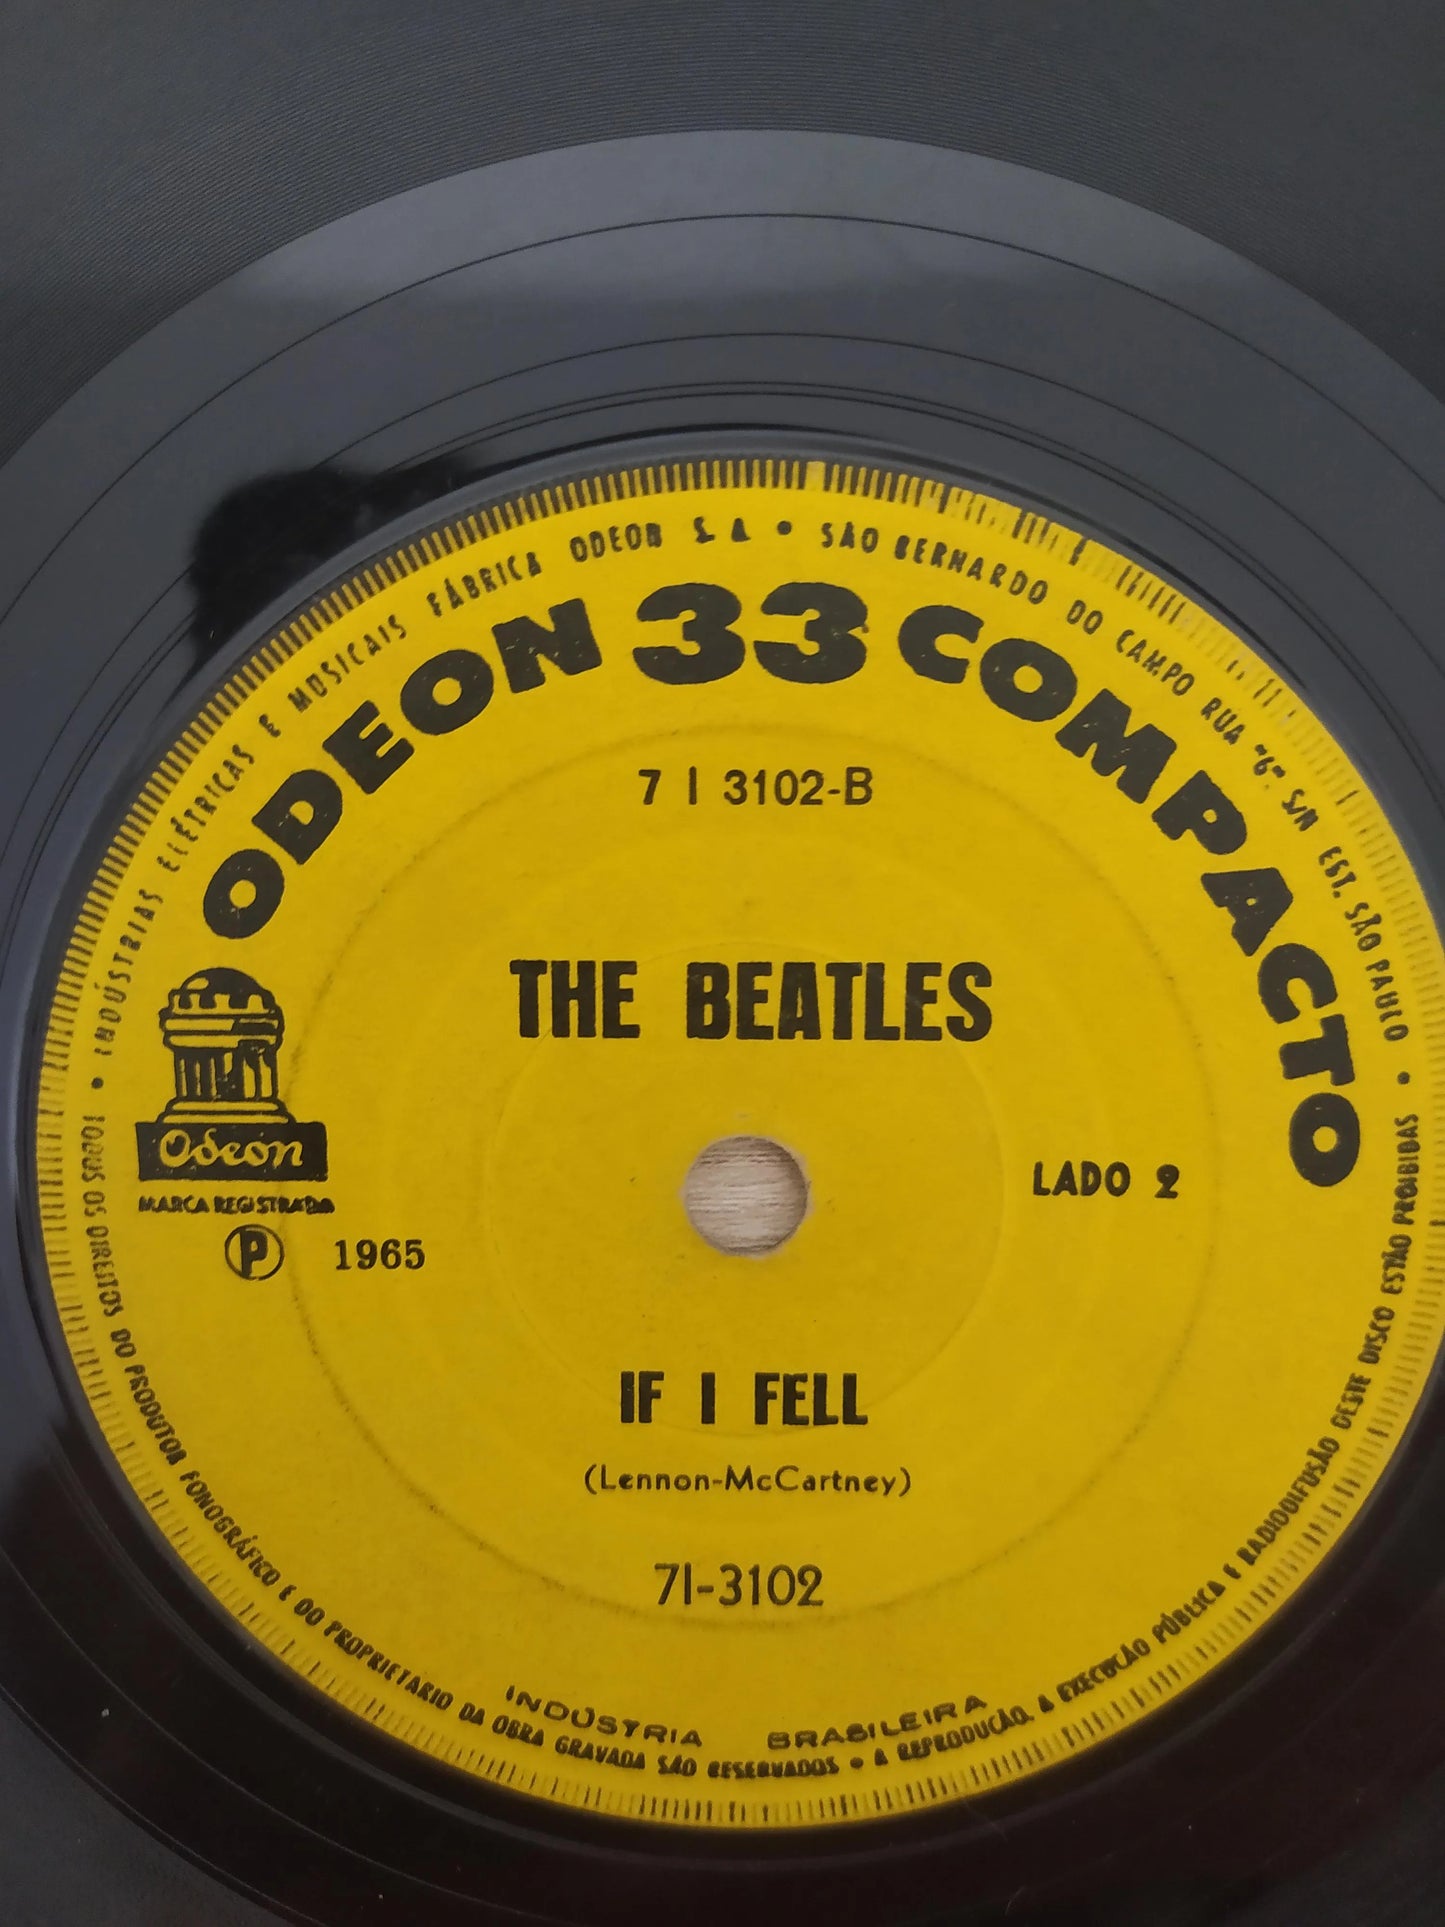 Vinil Compacto The Beatles I Feel Fine / If I Fell Leia